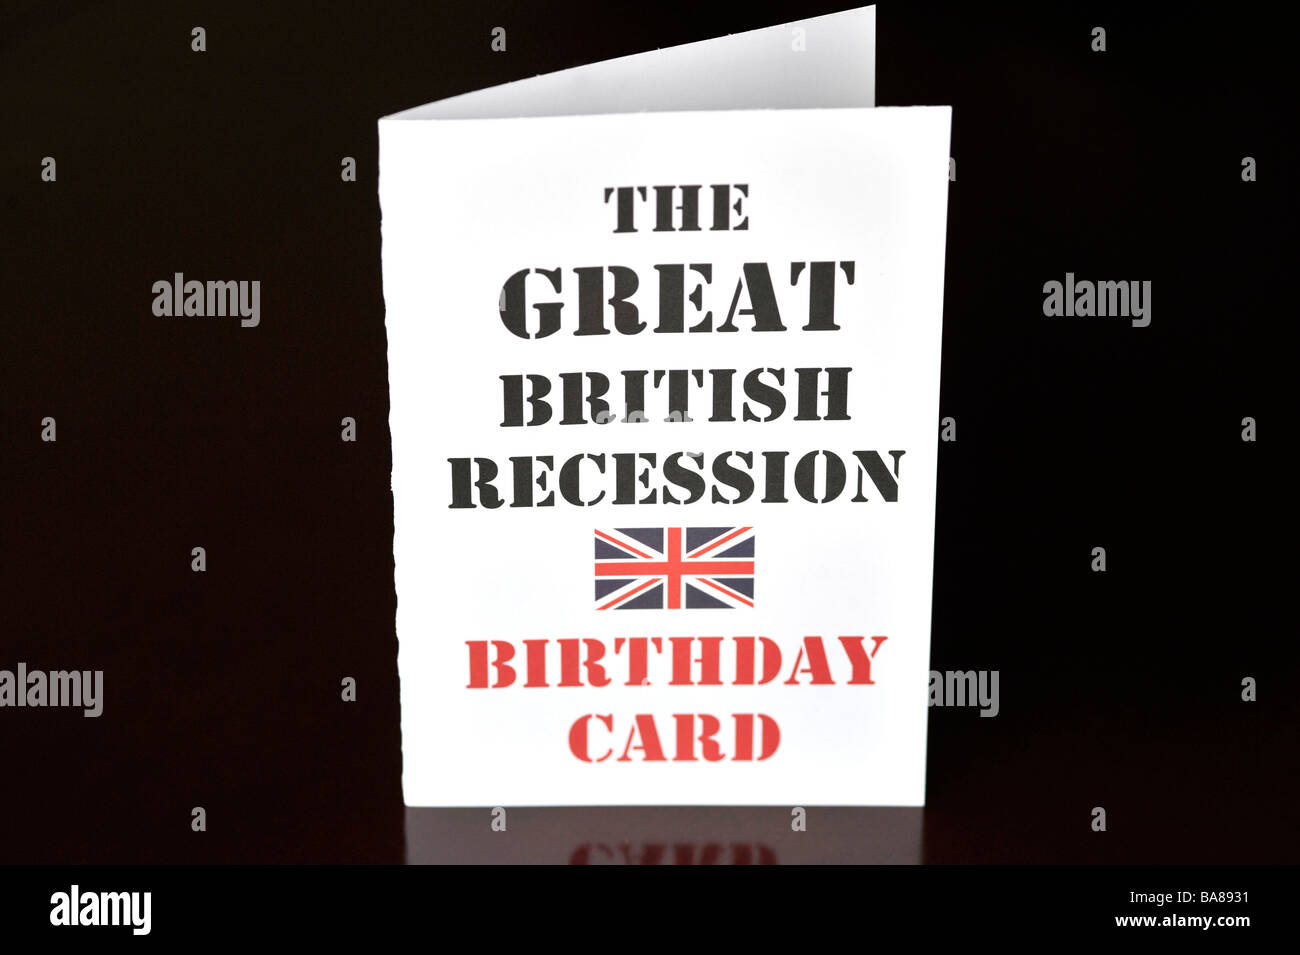 the great british recession birthday card Stock Photo